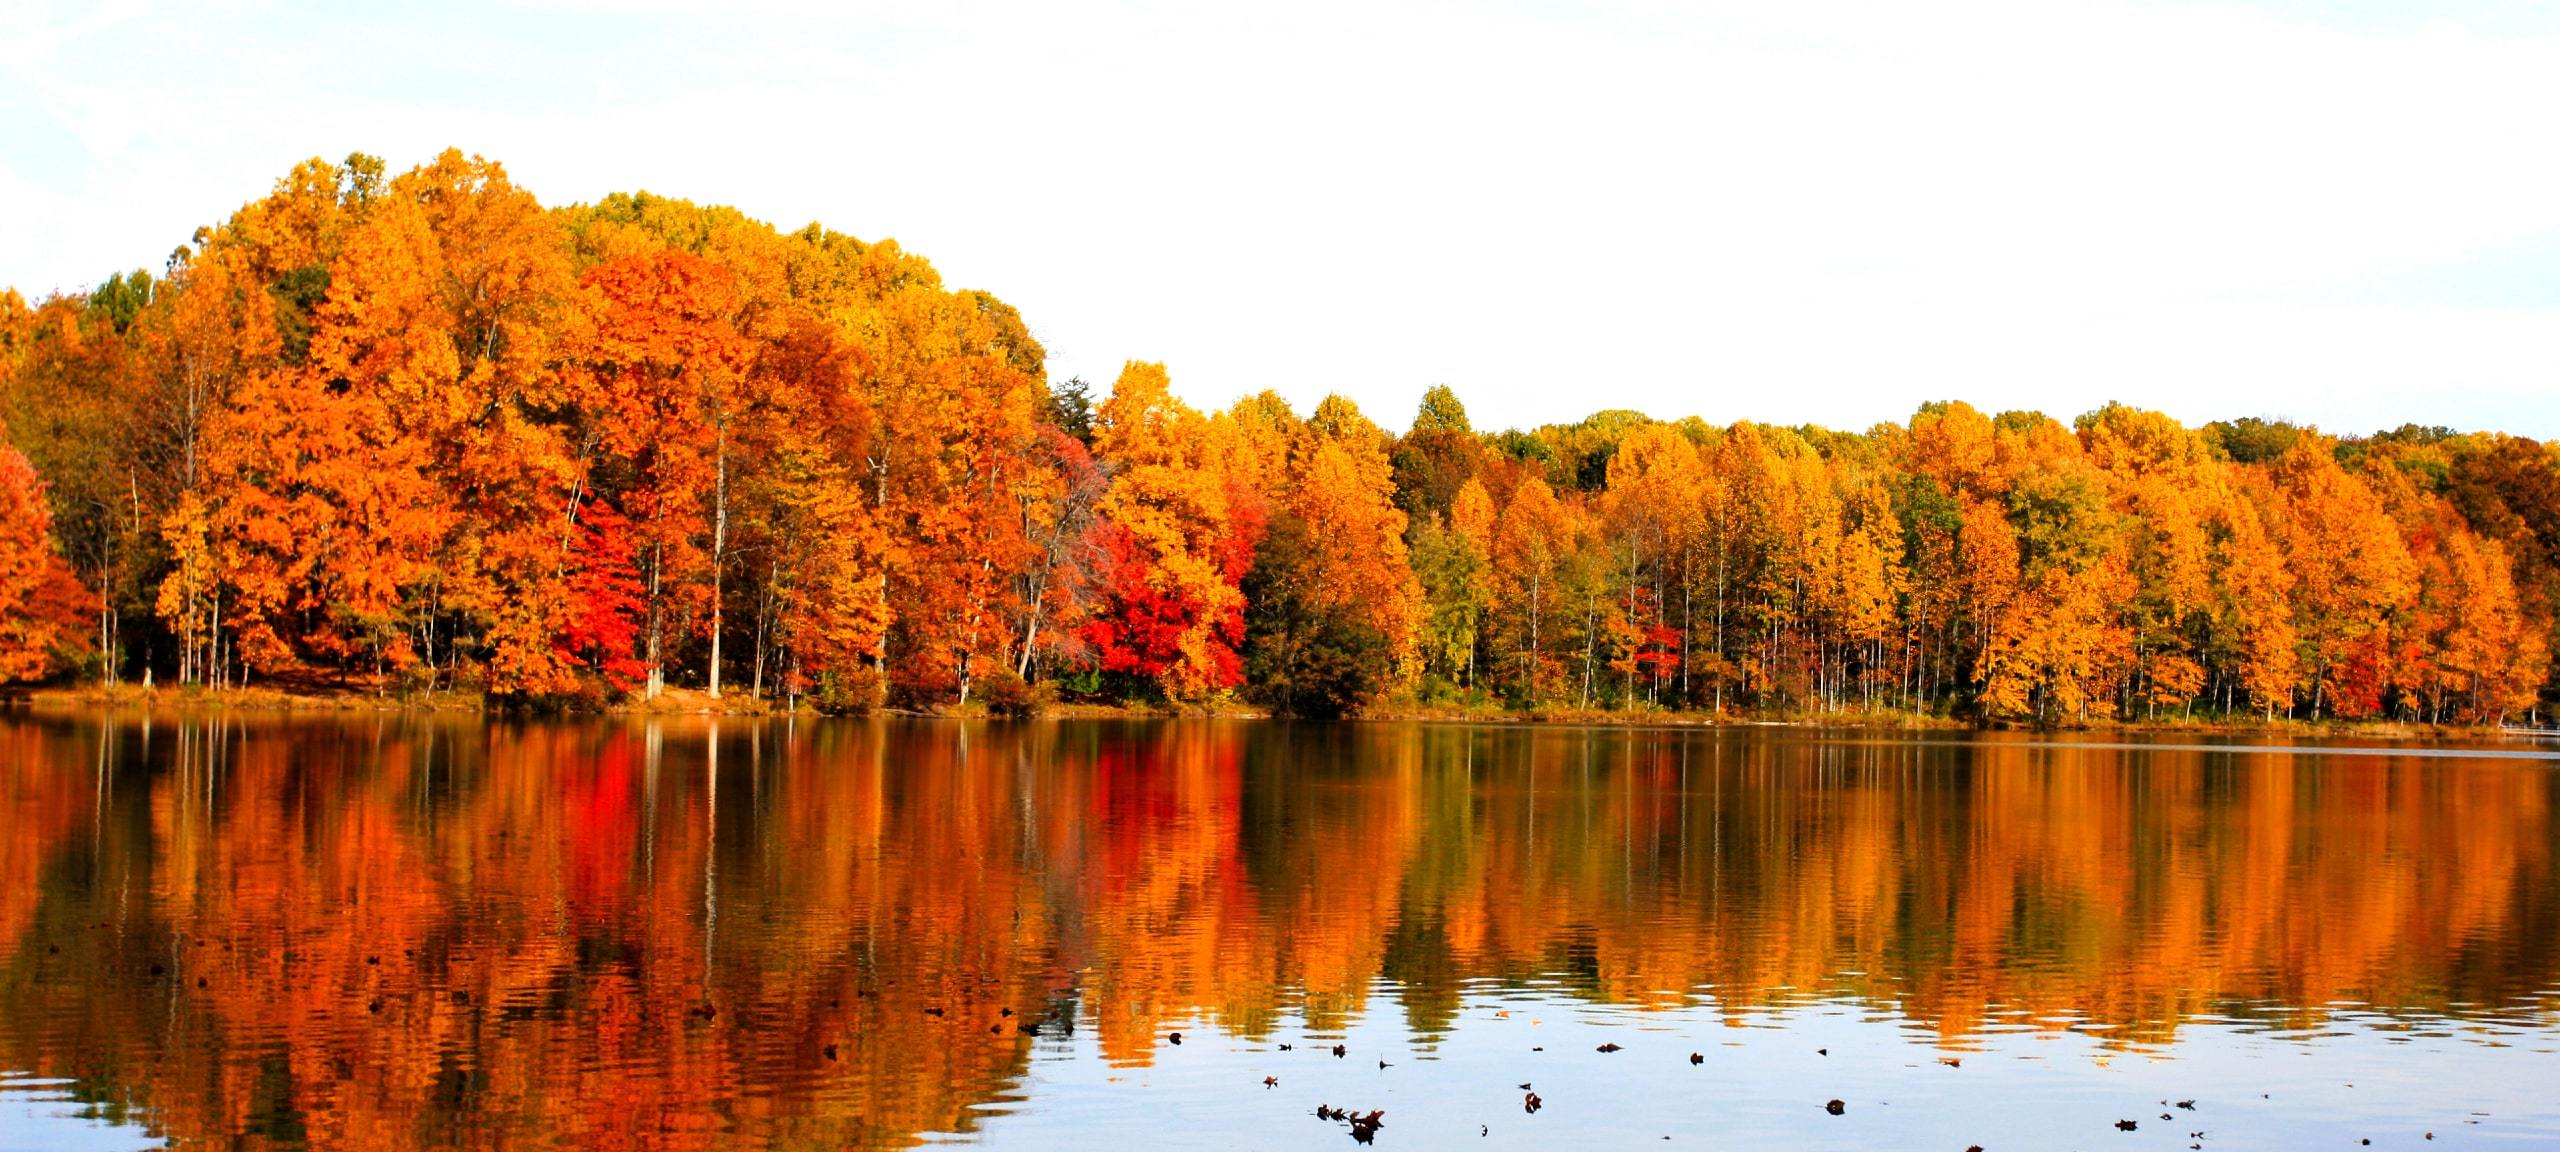 Autumn at Seneca Creek State Park in Germantown, Maryland